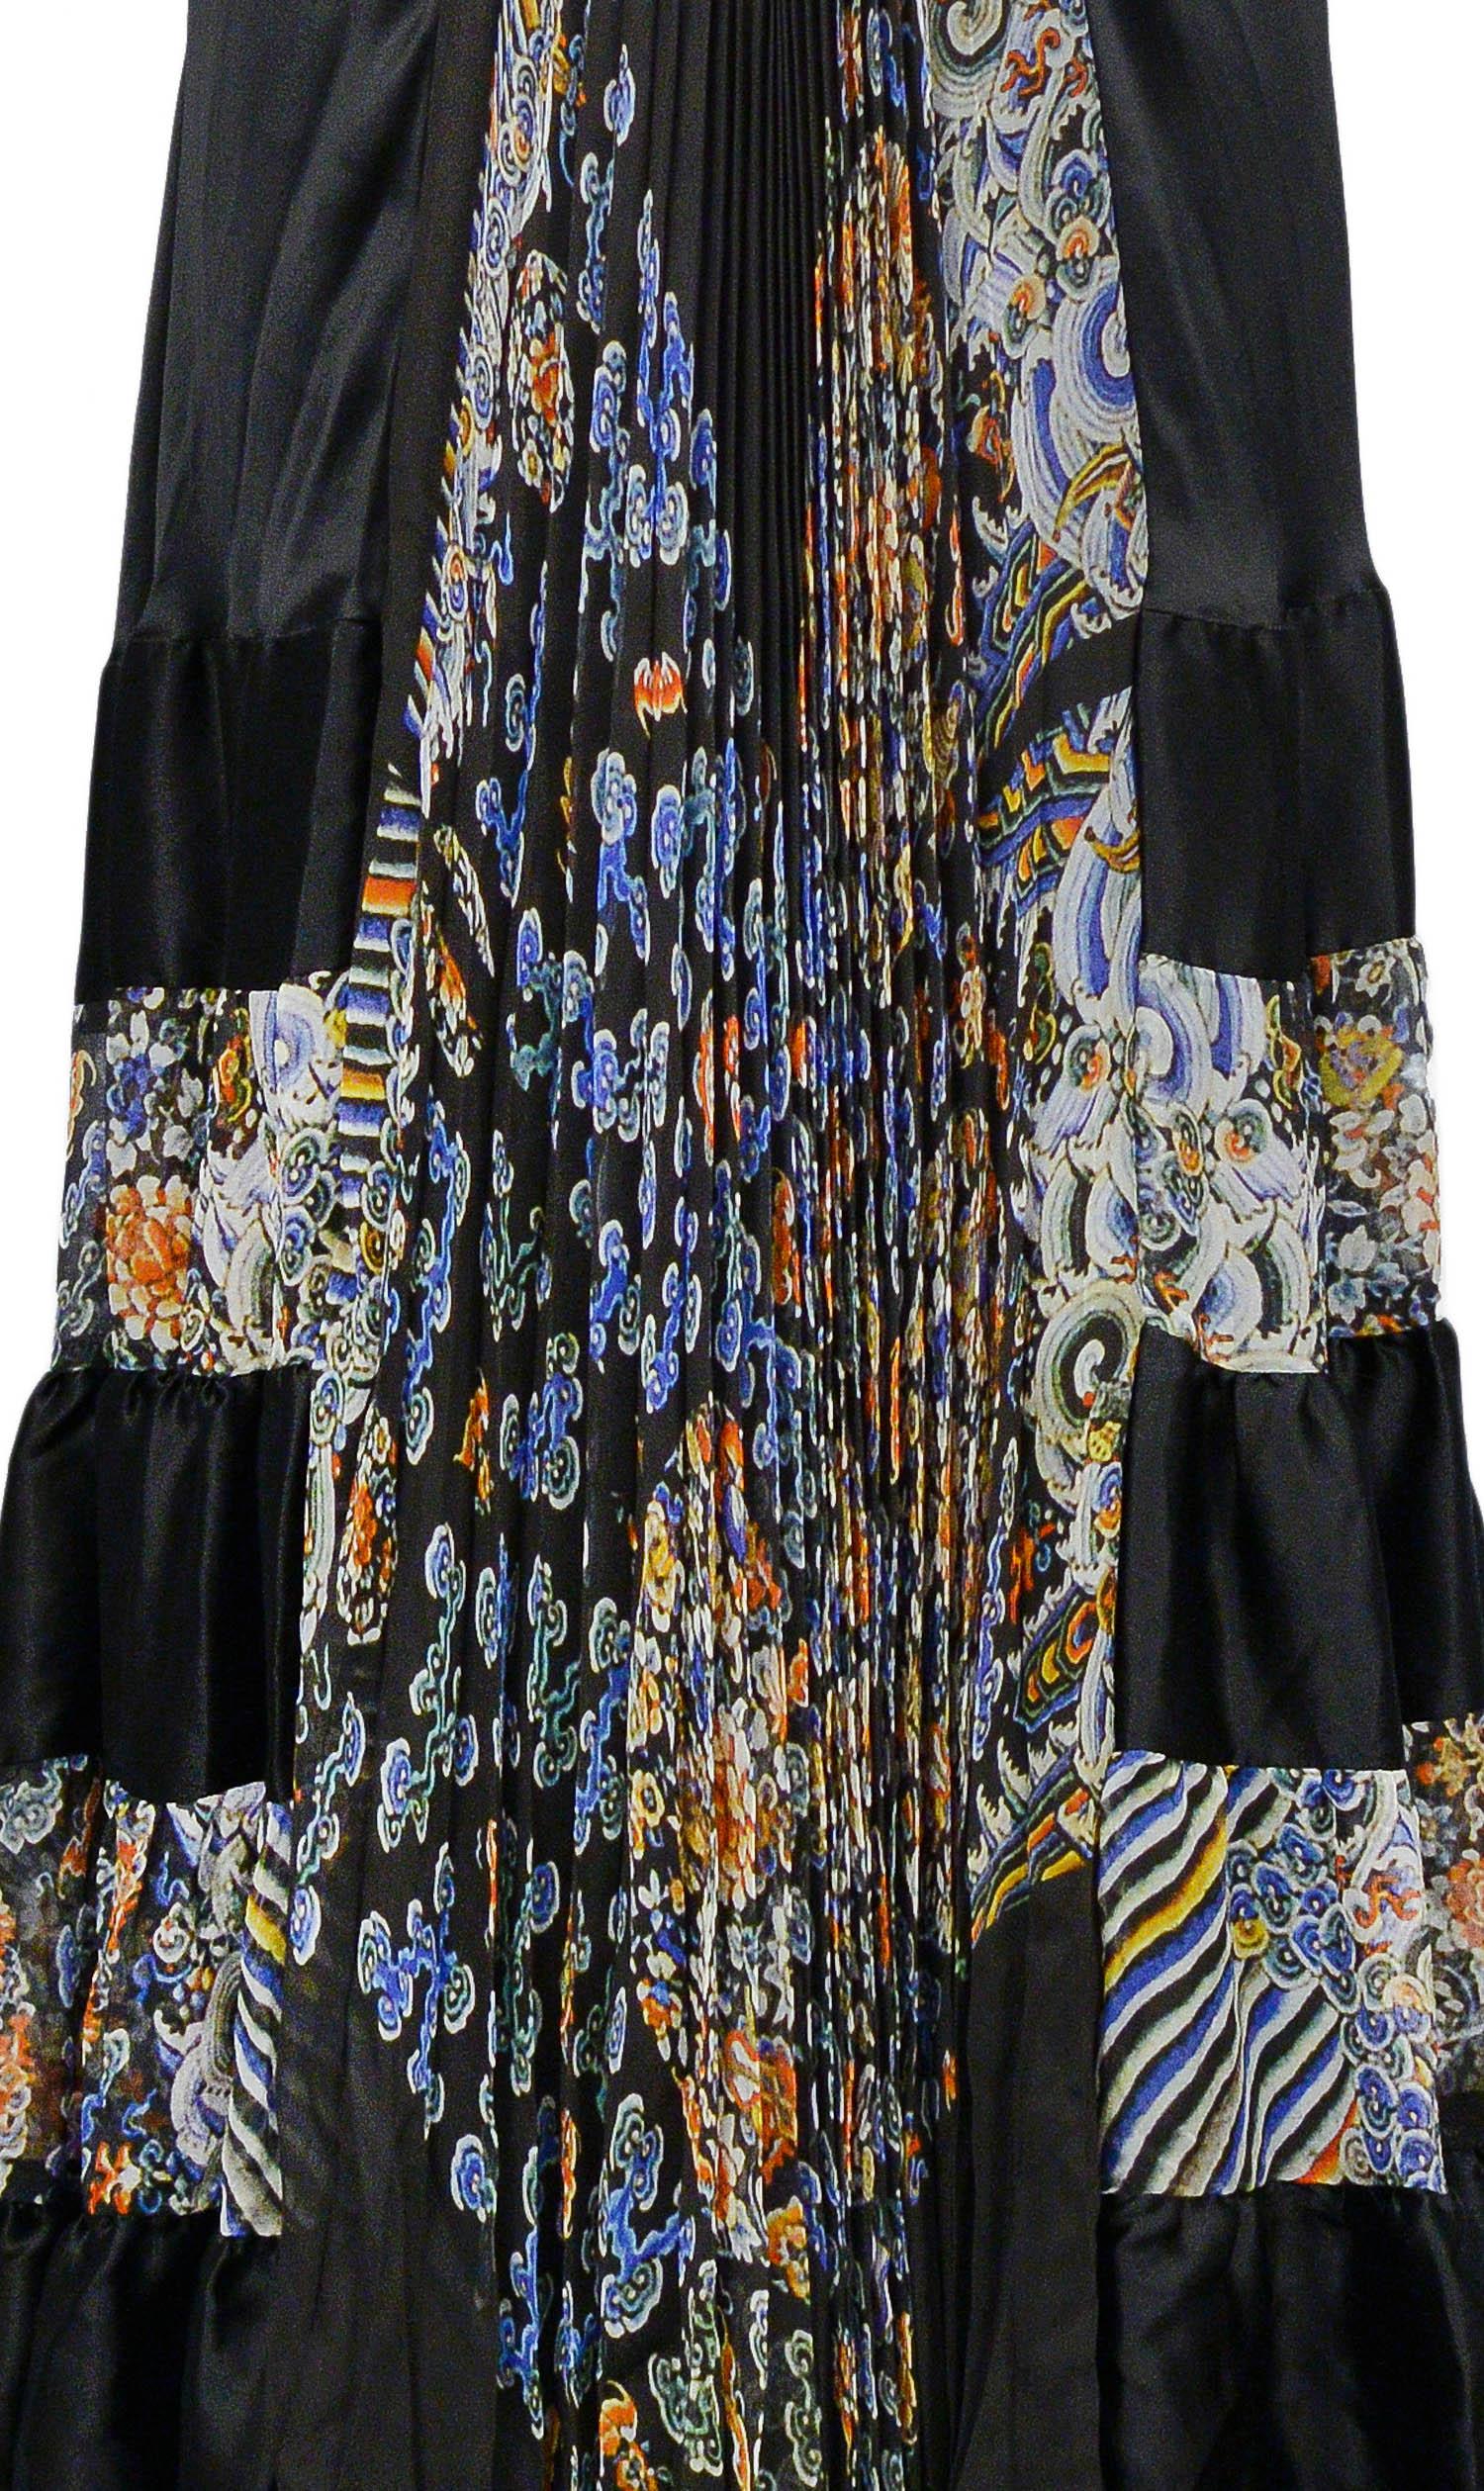 Women's Balenciaga by Nicolas Ghesquière Black and Floral Halter Gown, 2007 